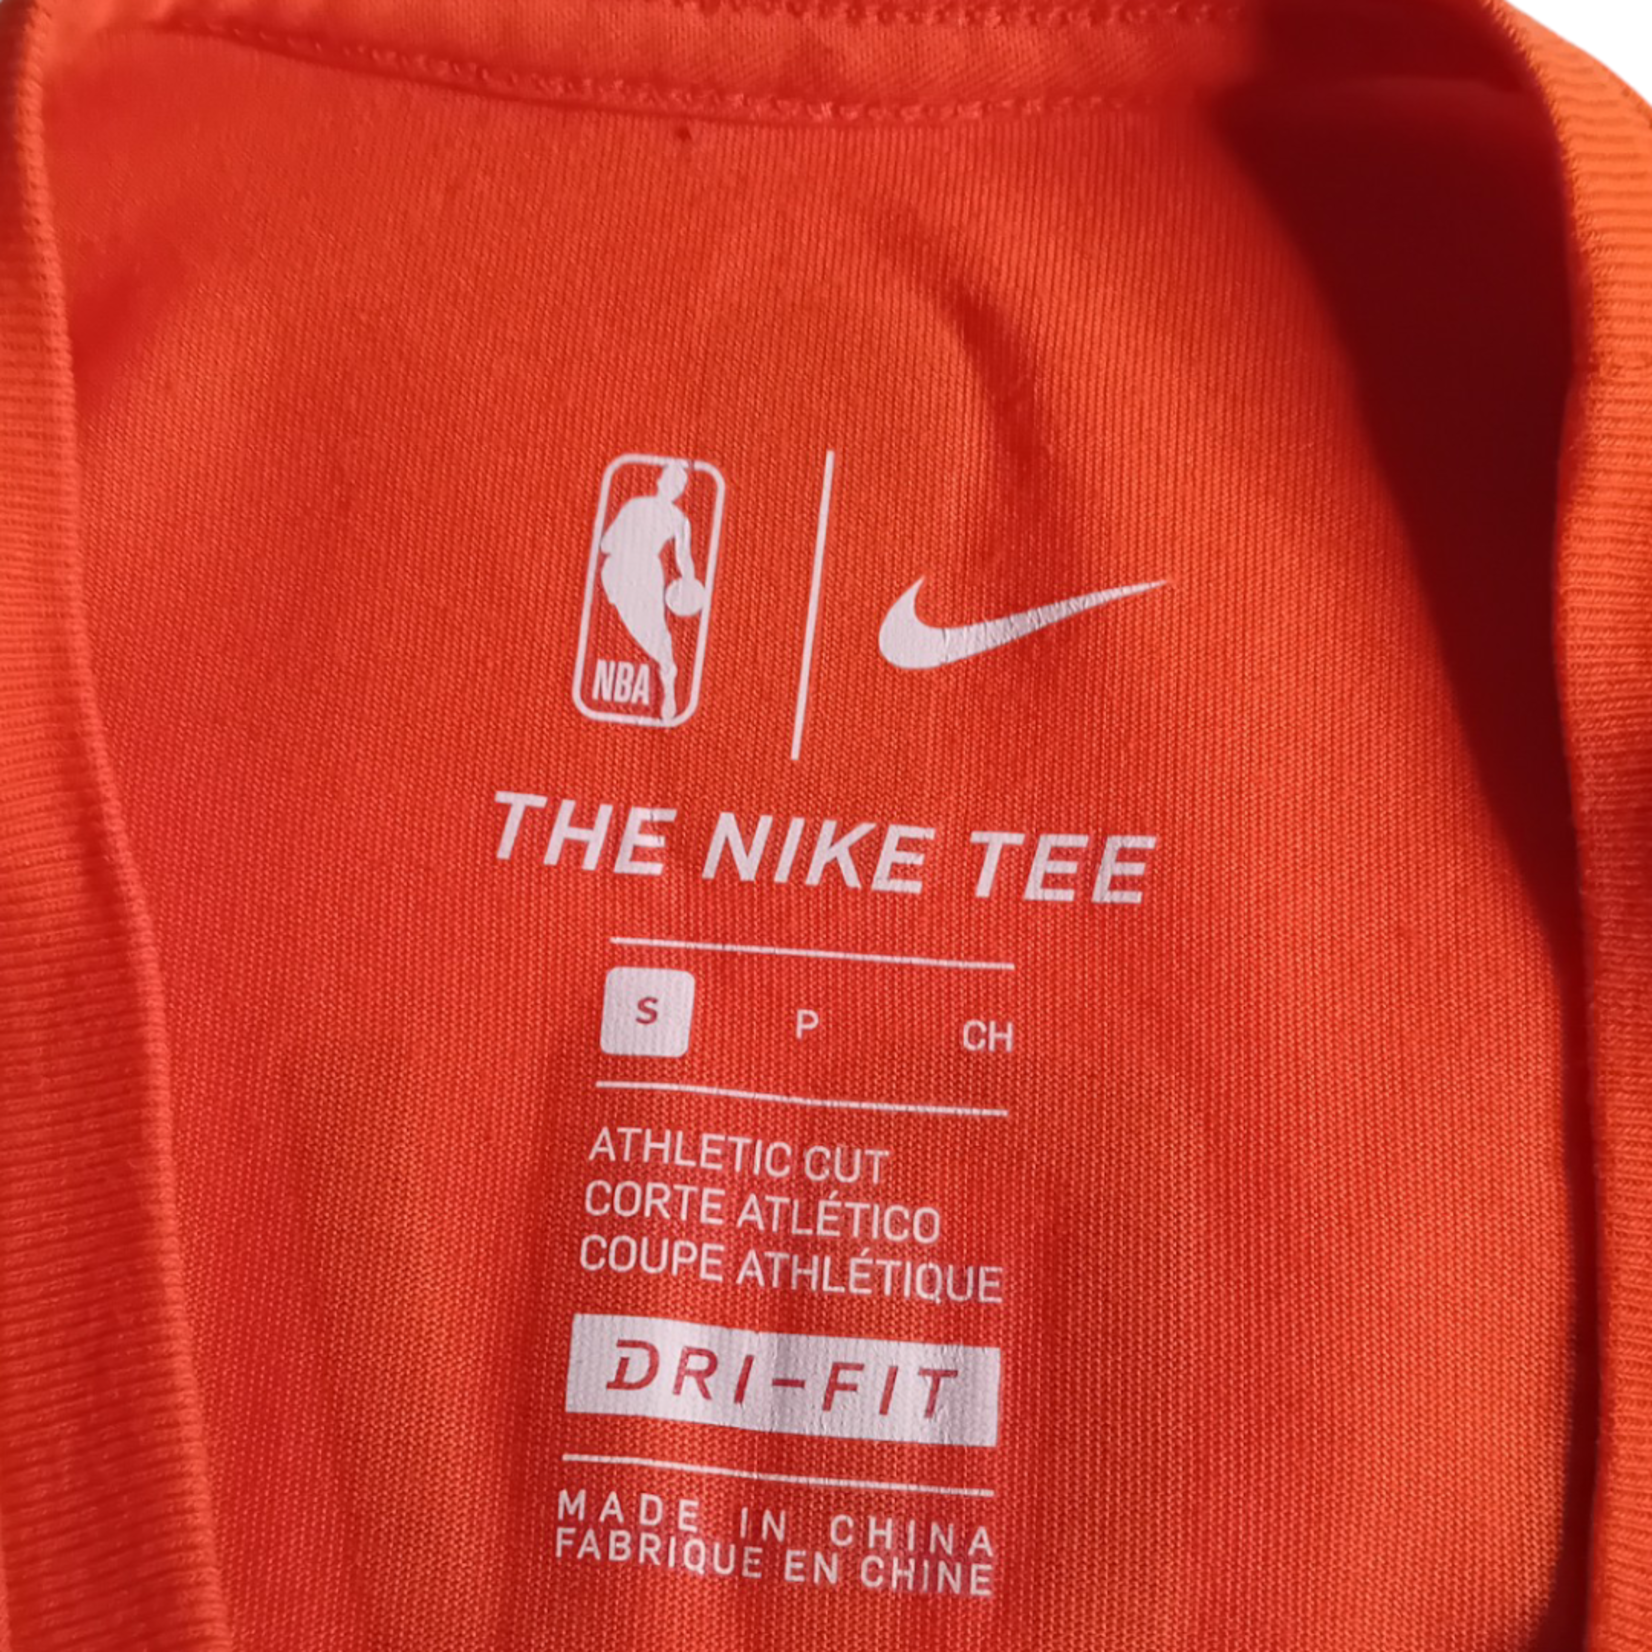 Nike Origineel Nike vintage NBA basketbal shirt Cleveland Caveliers